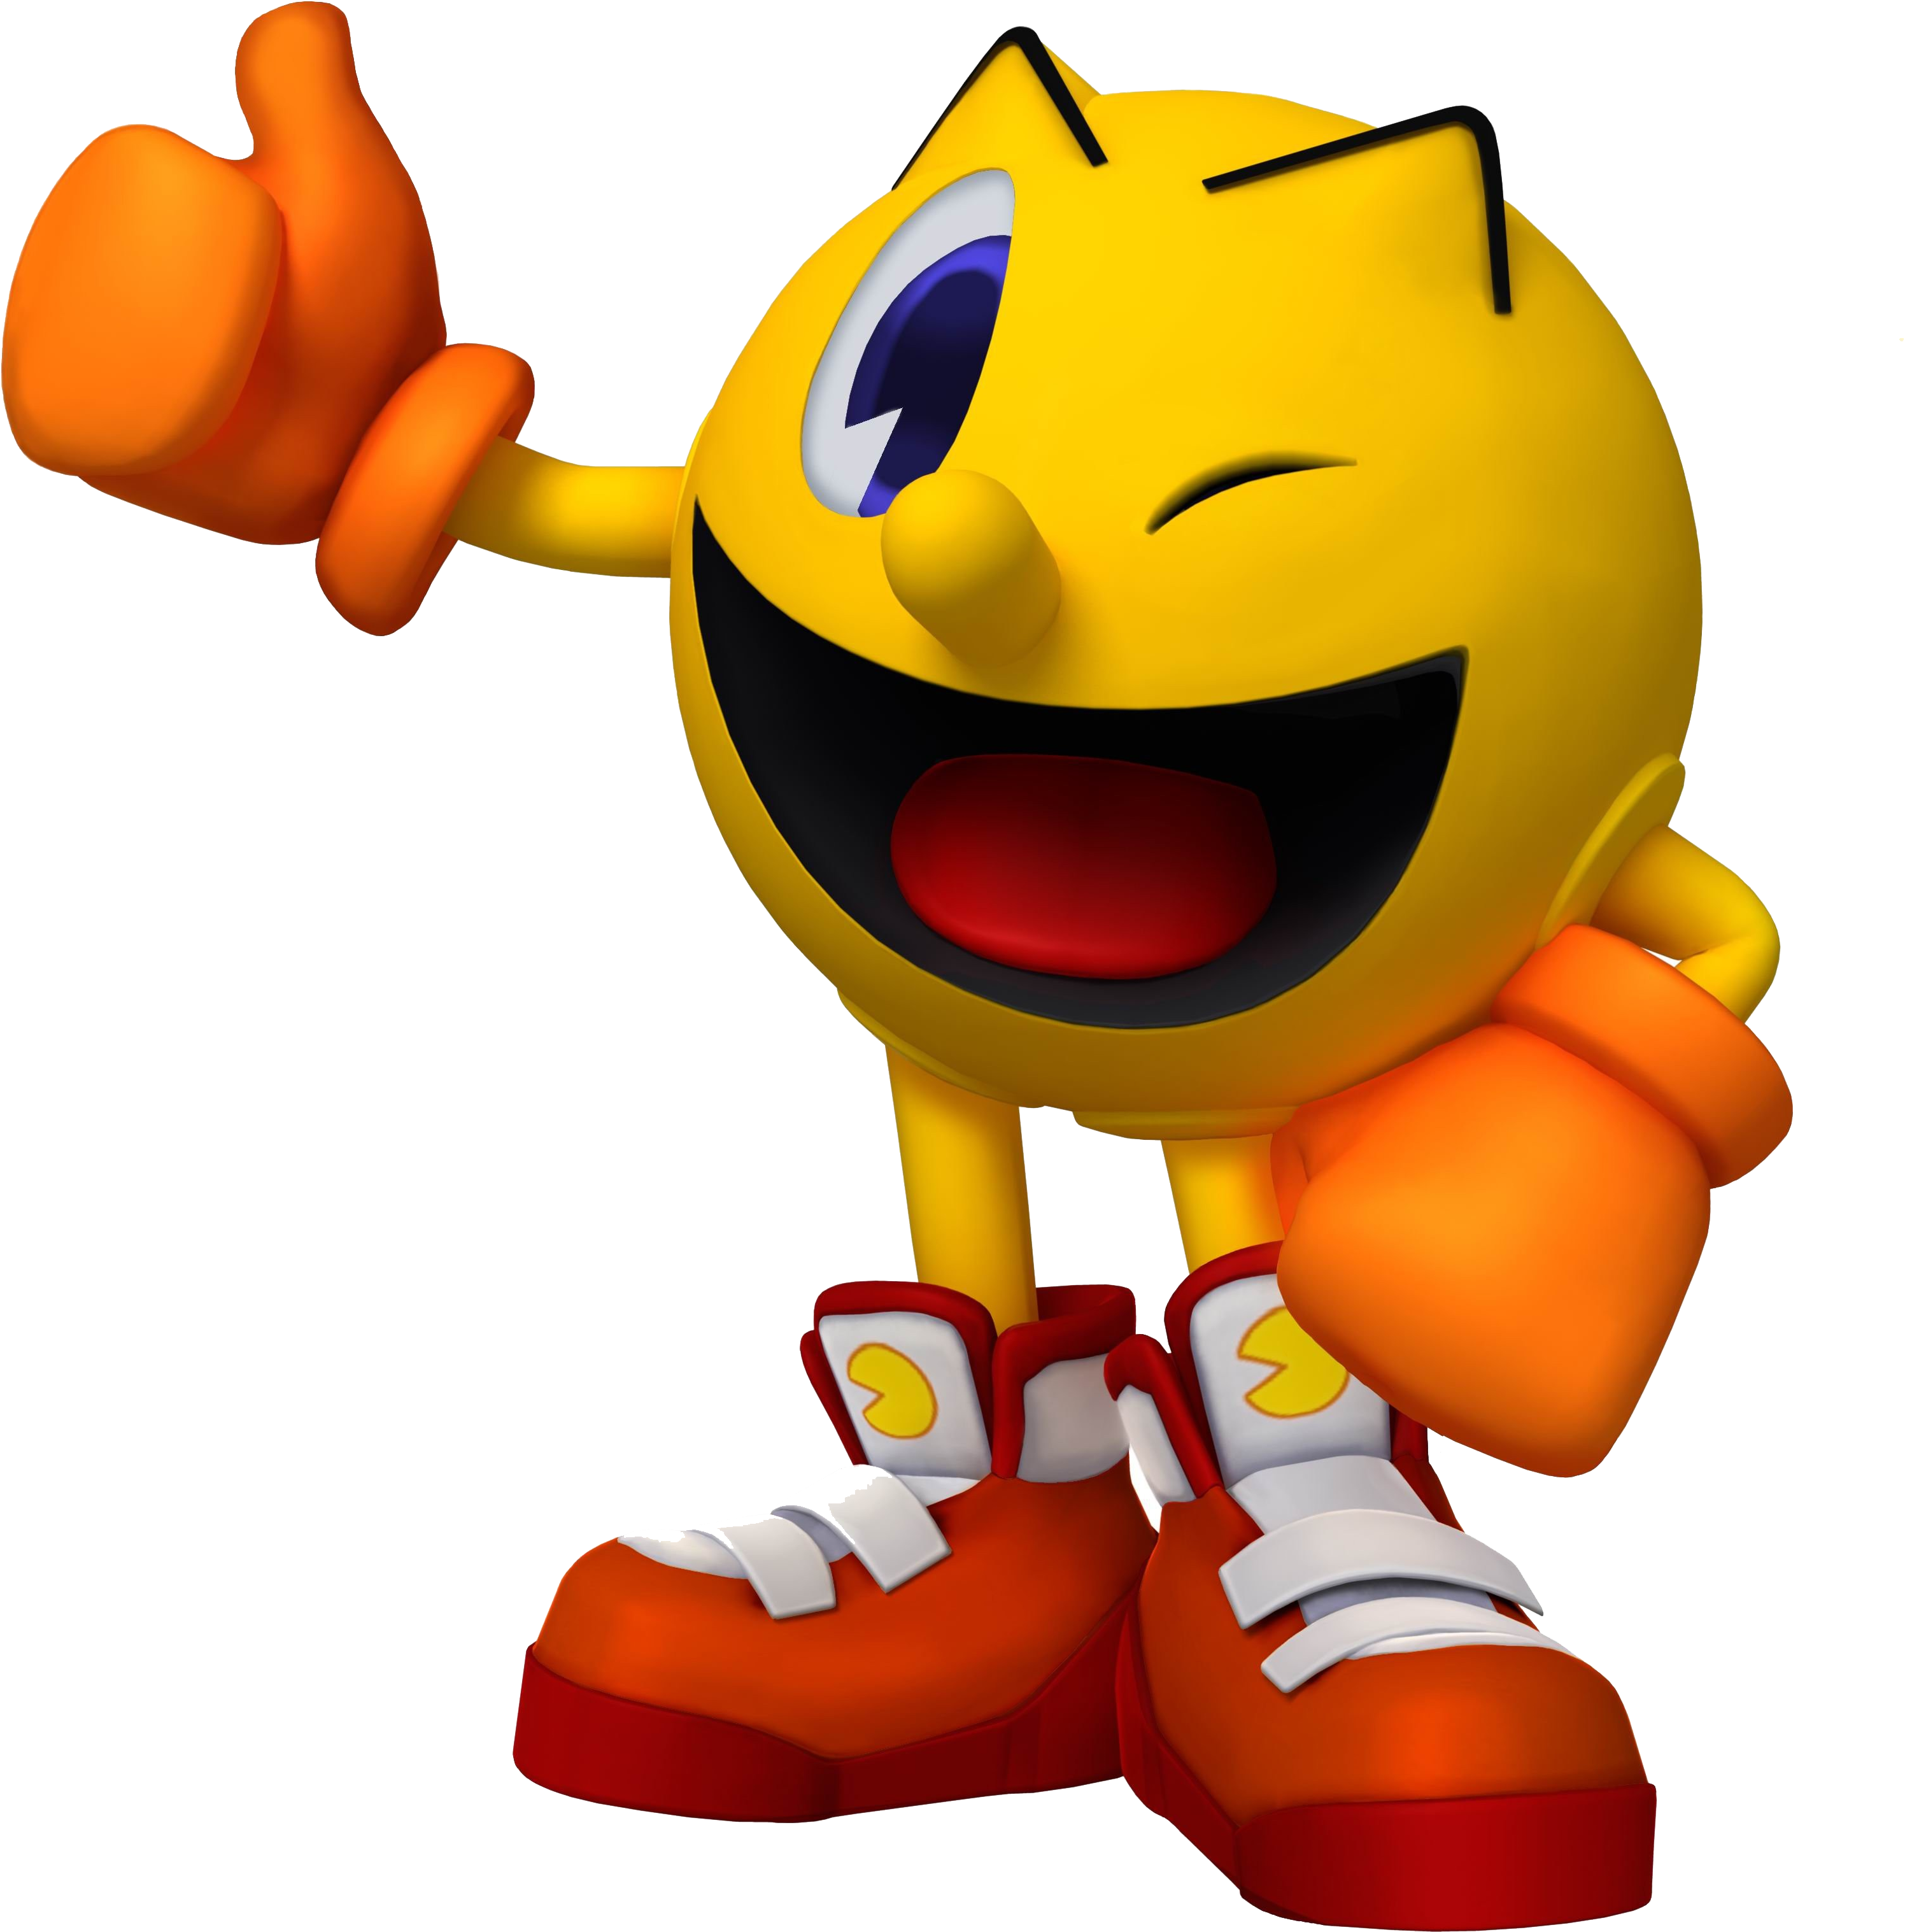 Pac-man Png Transparent Image - Pacman Super Smash Bros (4096x4096), Png Download